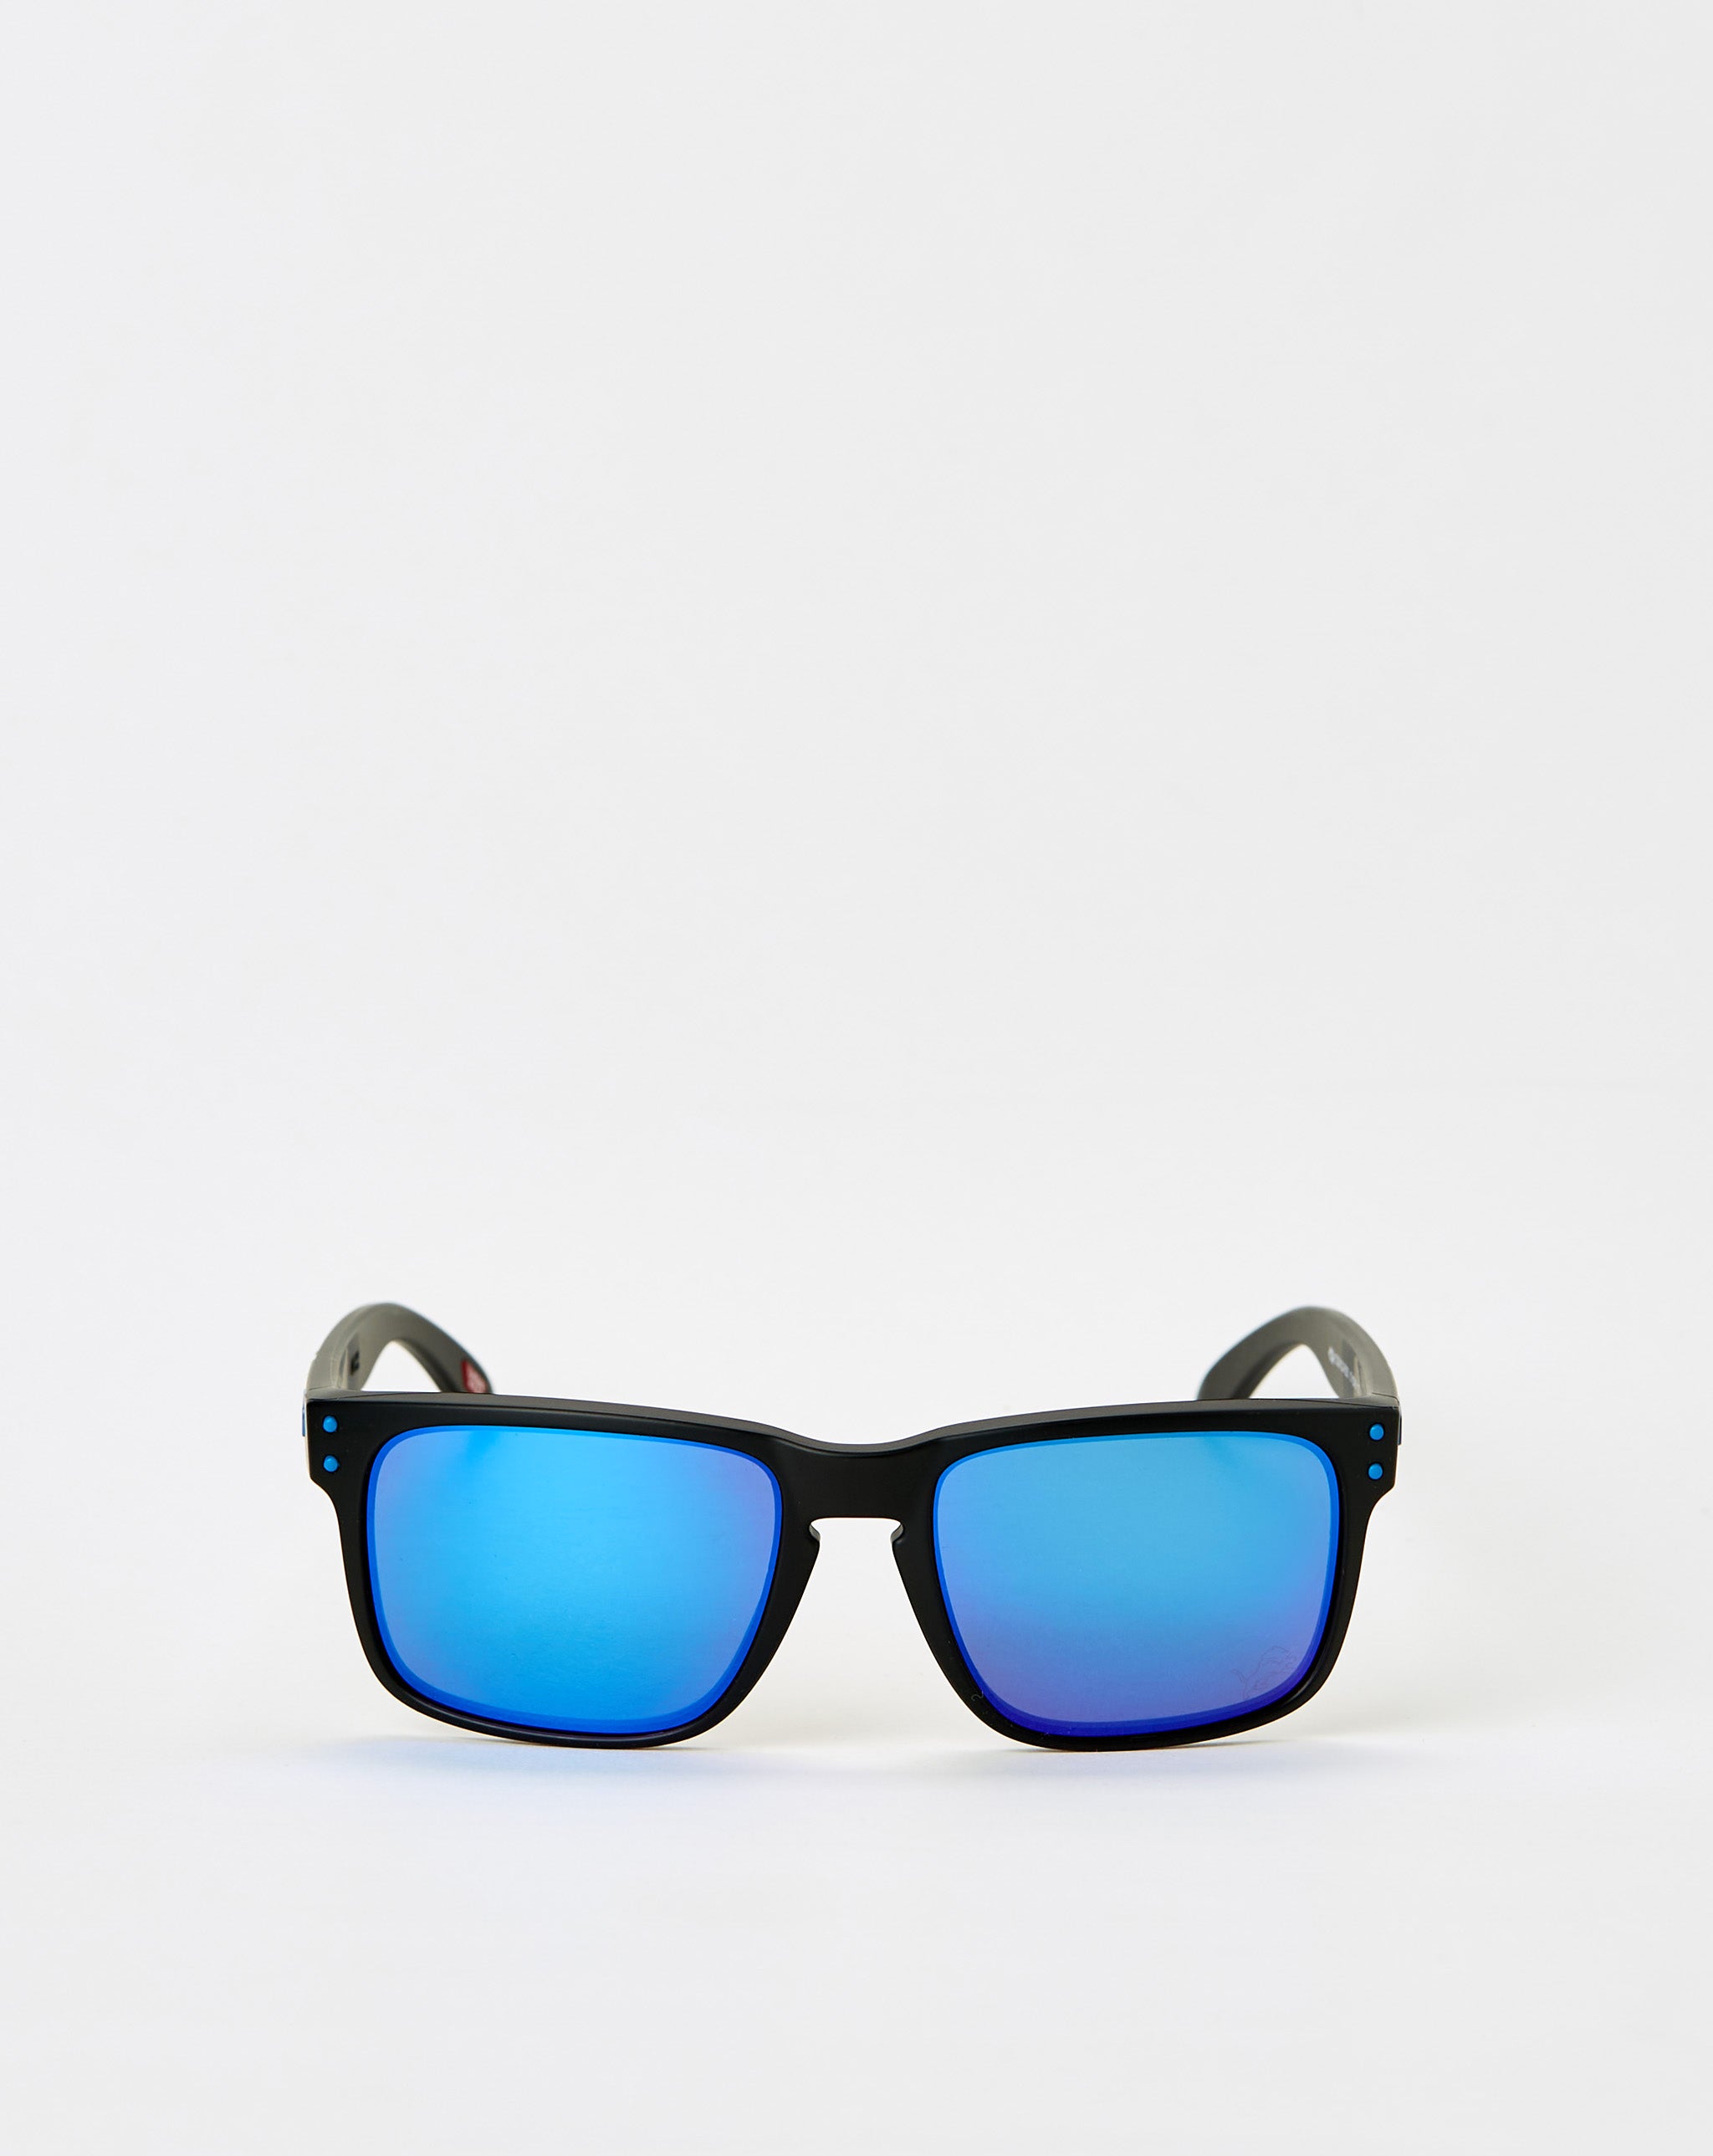 Dries Van Noten Black Linda Farrow Edition D-Frame black sunglasses